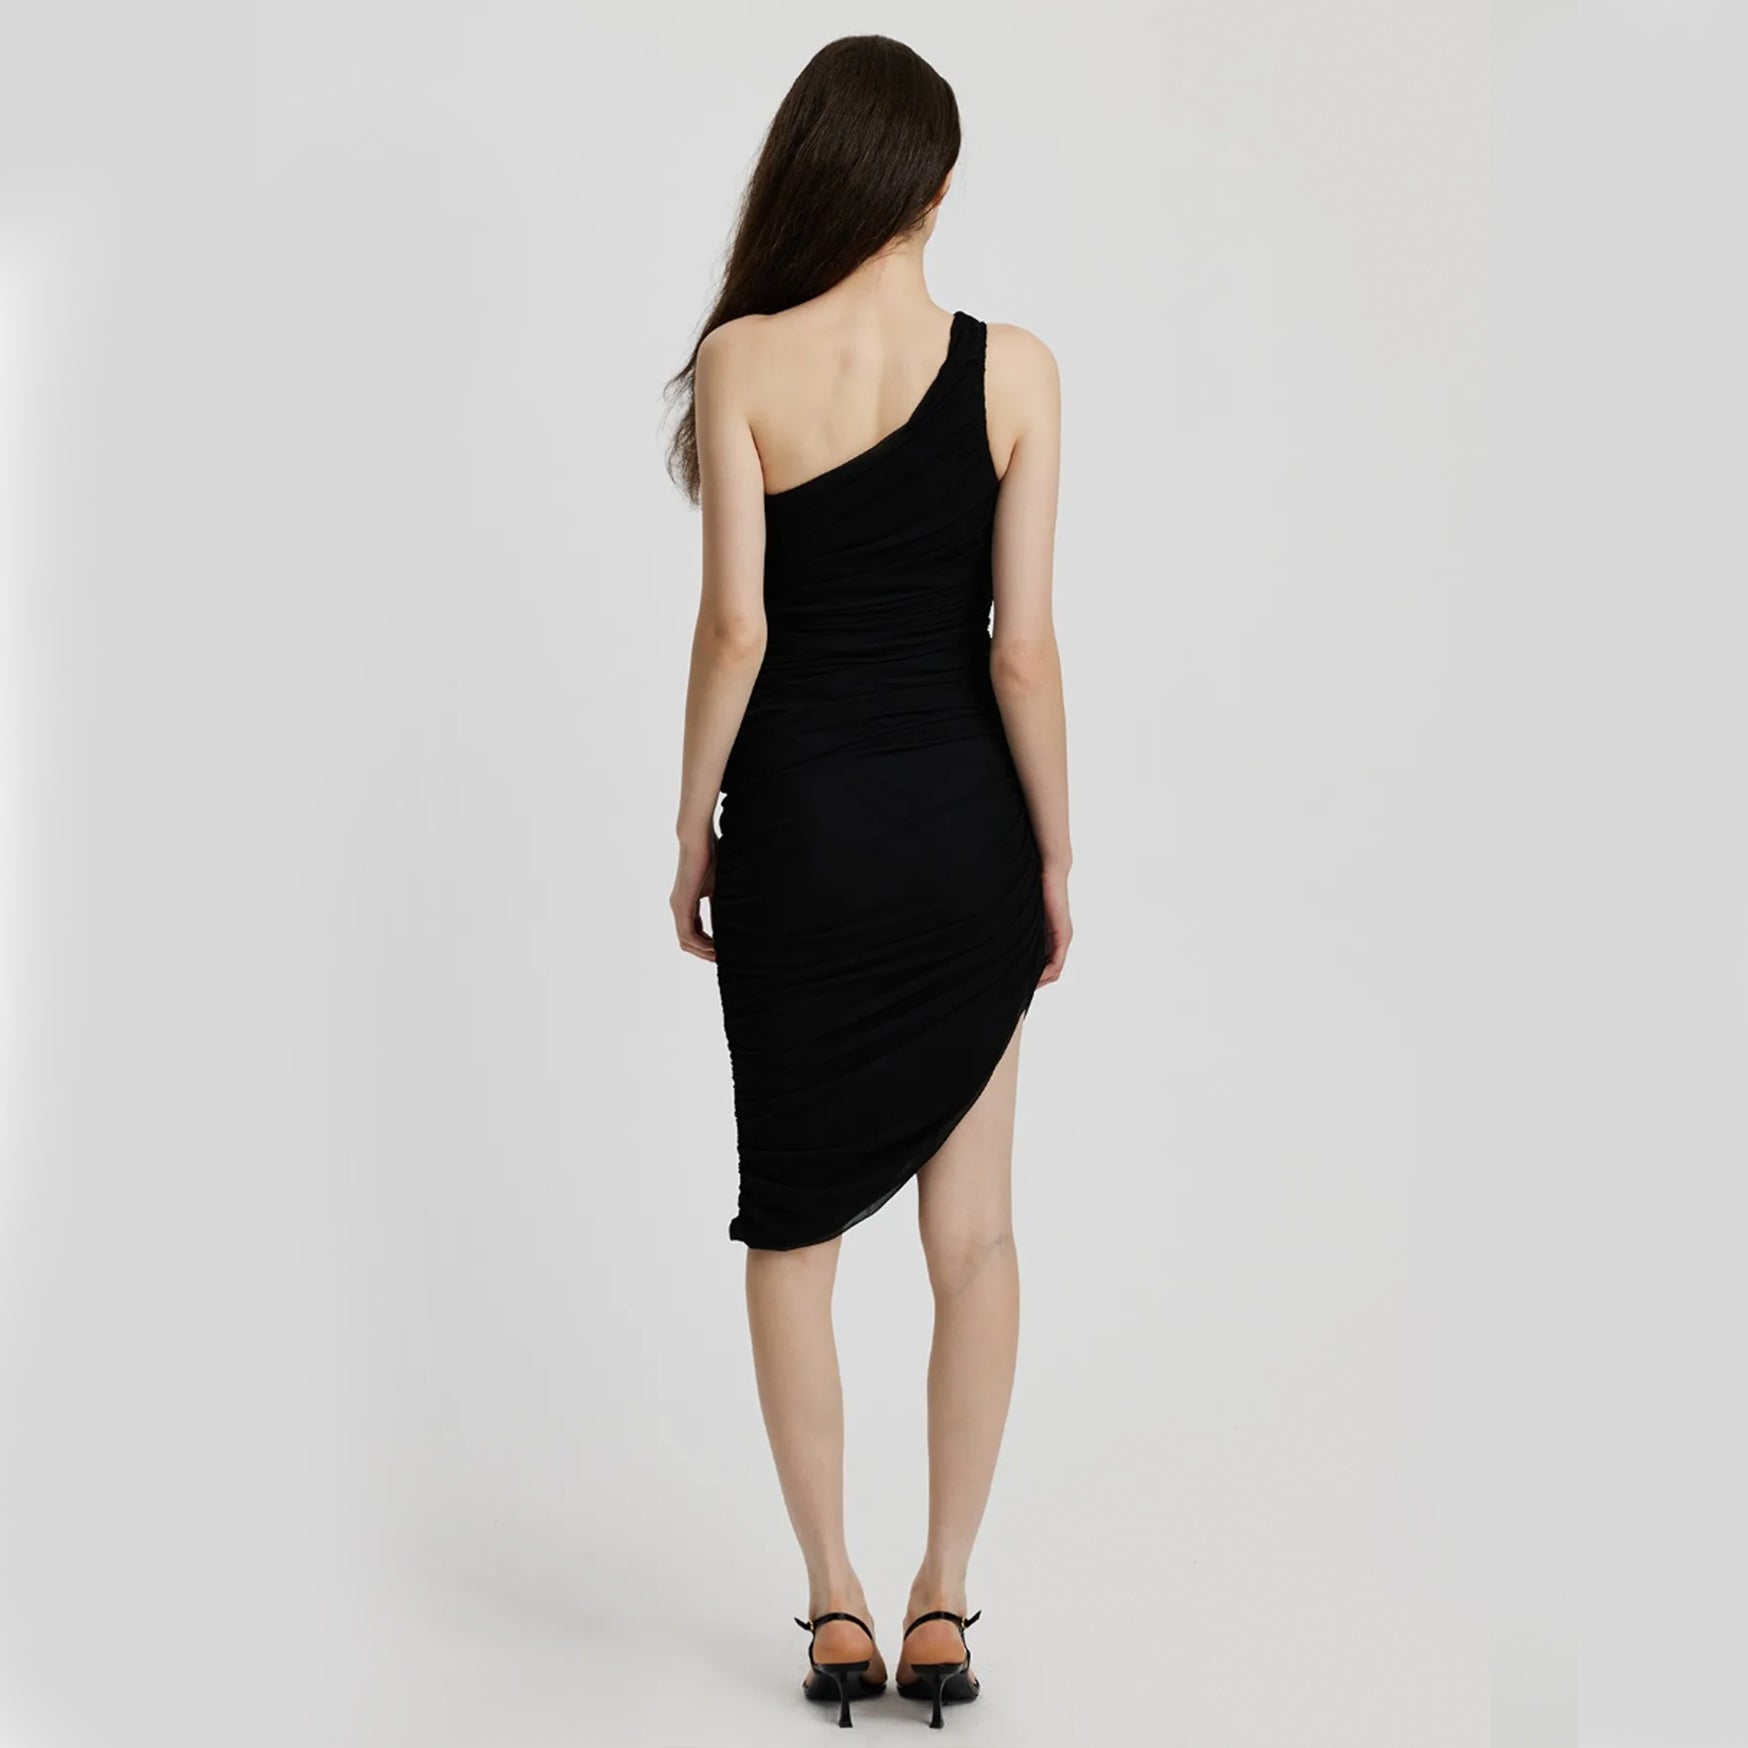 Gathered Asymmetric Bodycon Dress - Black S